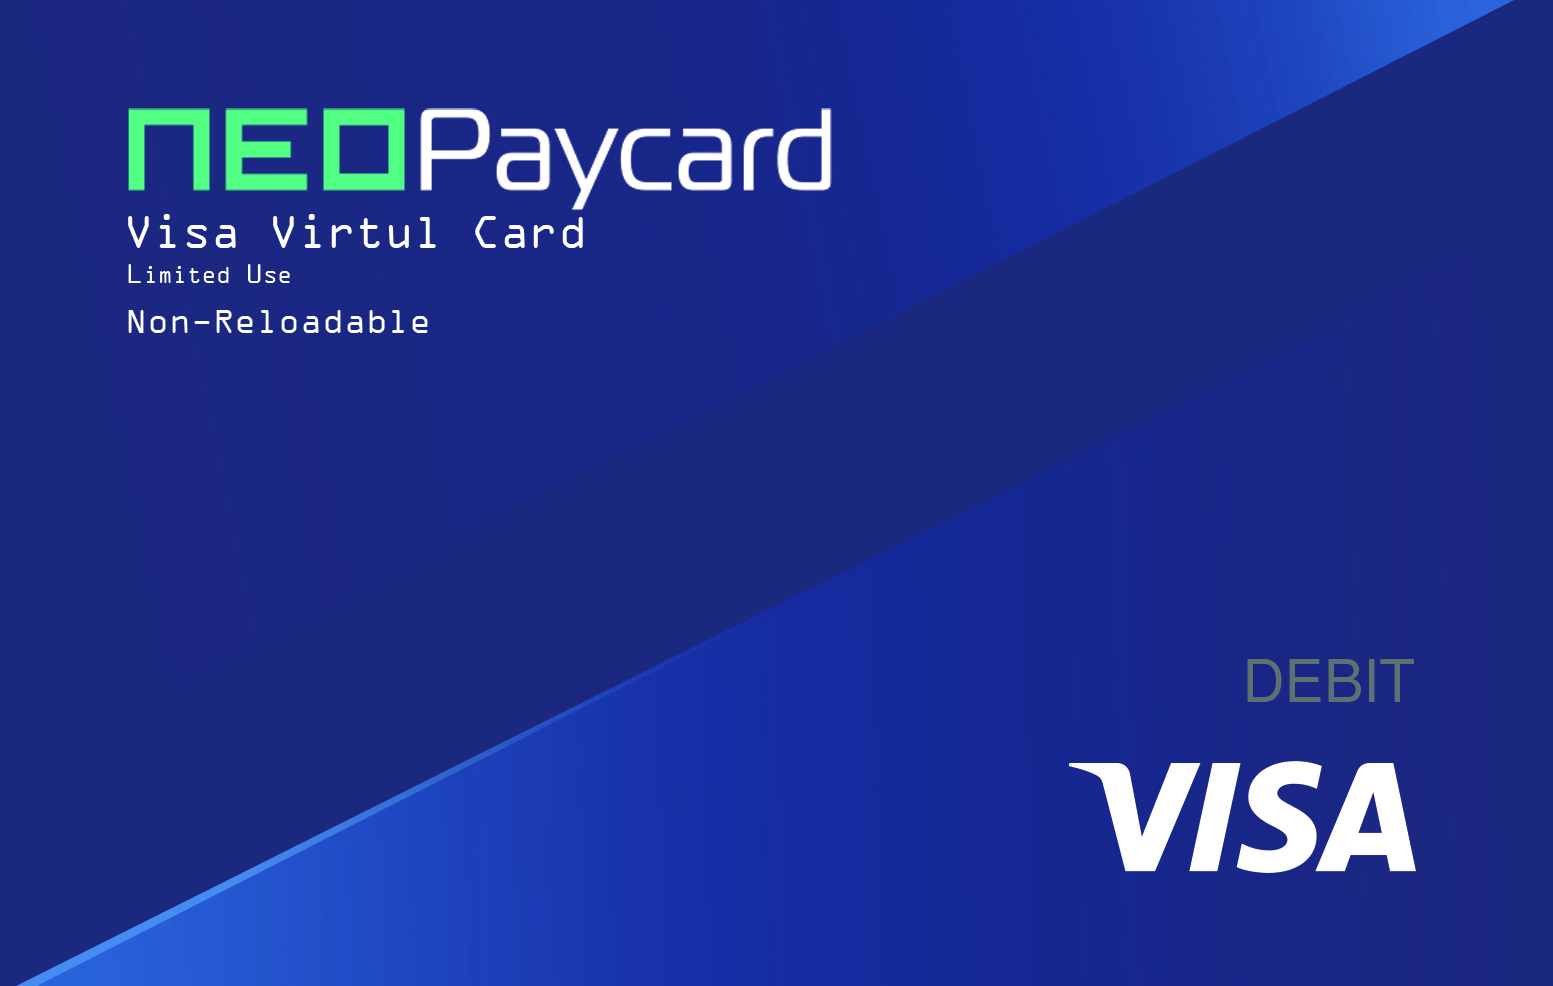 Neo Paycard